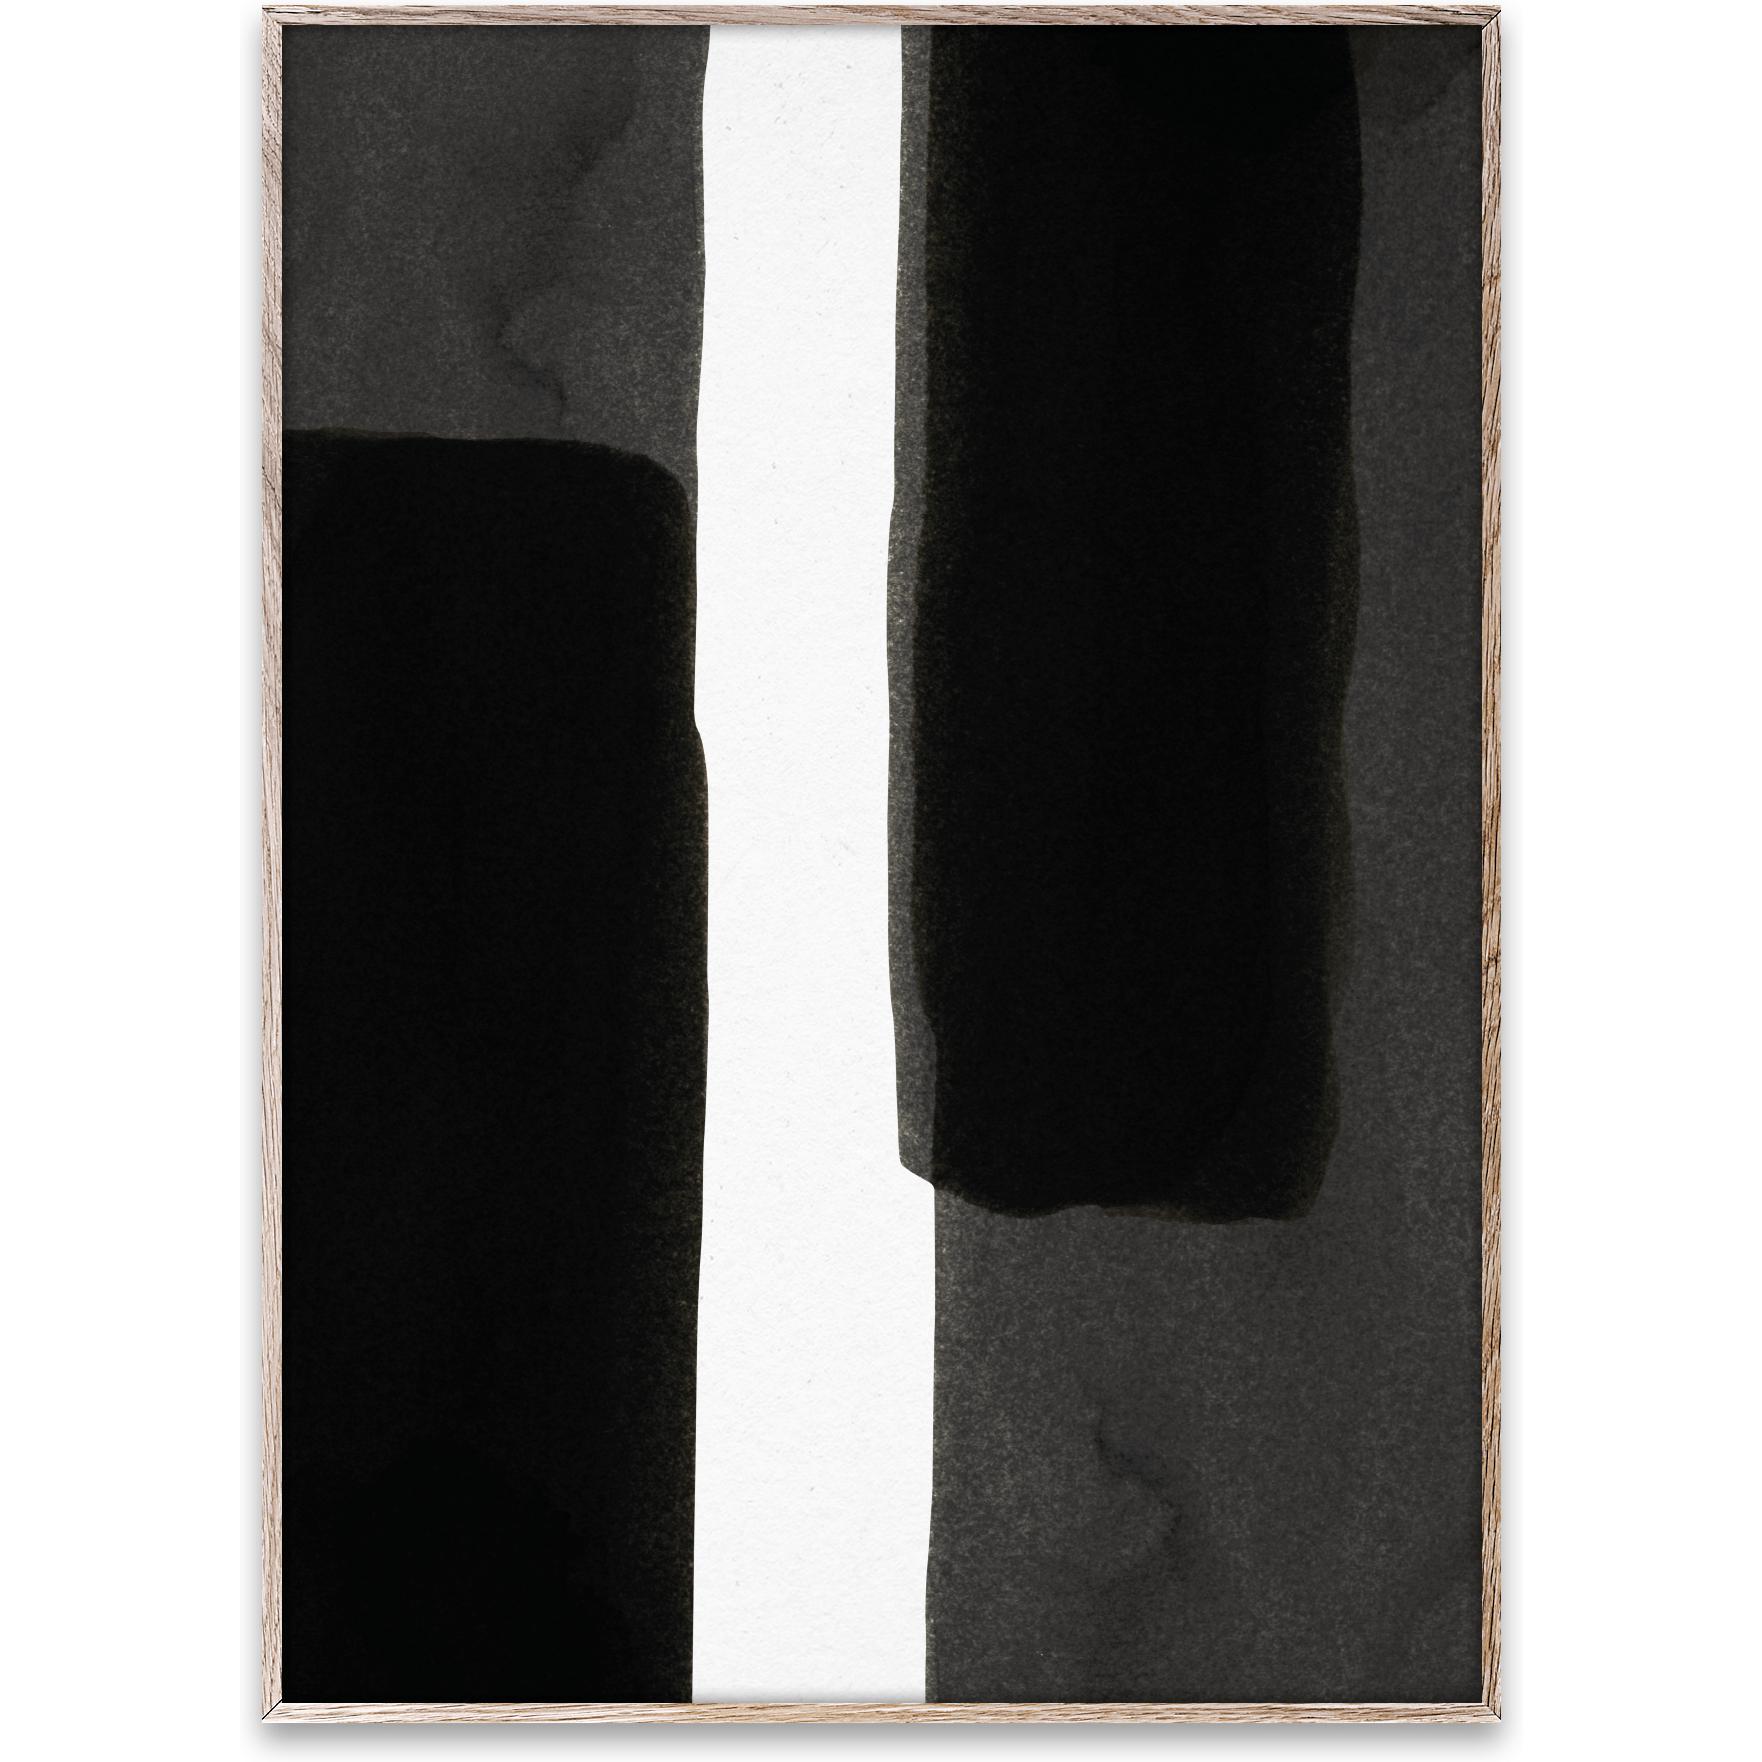 Pappírssamklippur enso veggspjald 30x40 cm, svart i